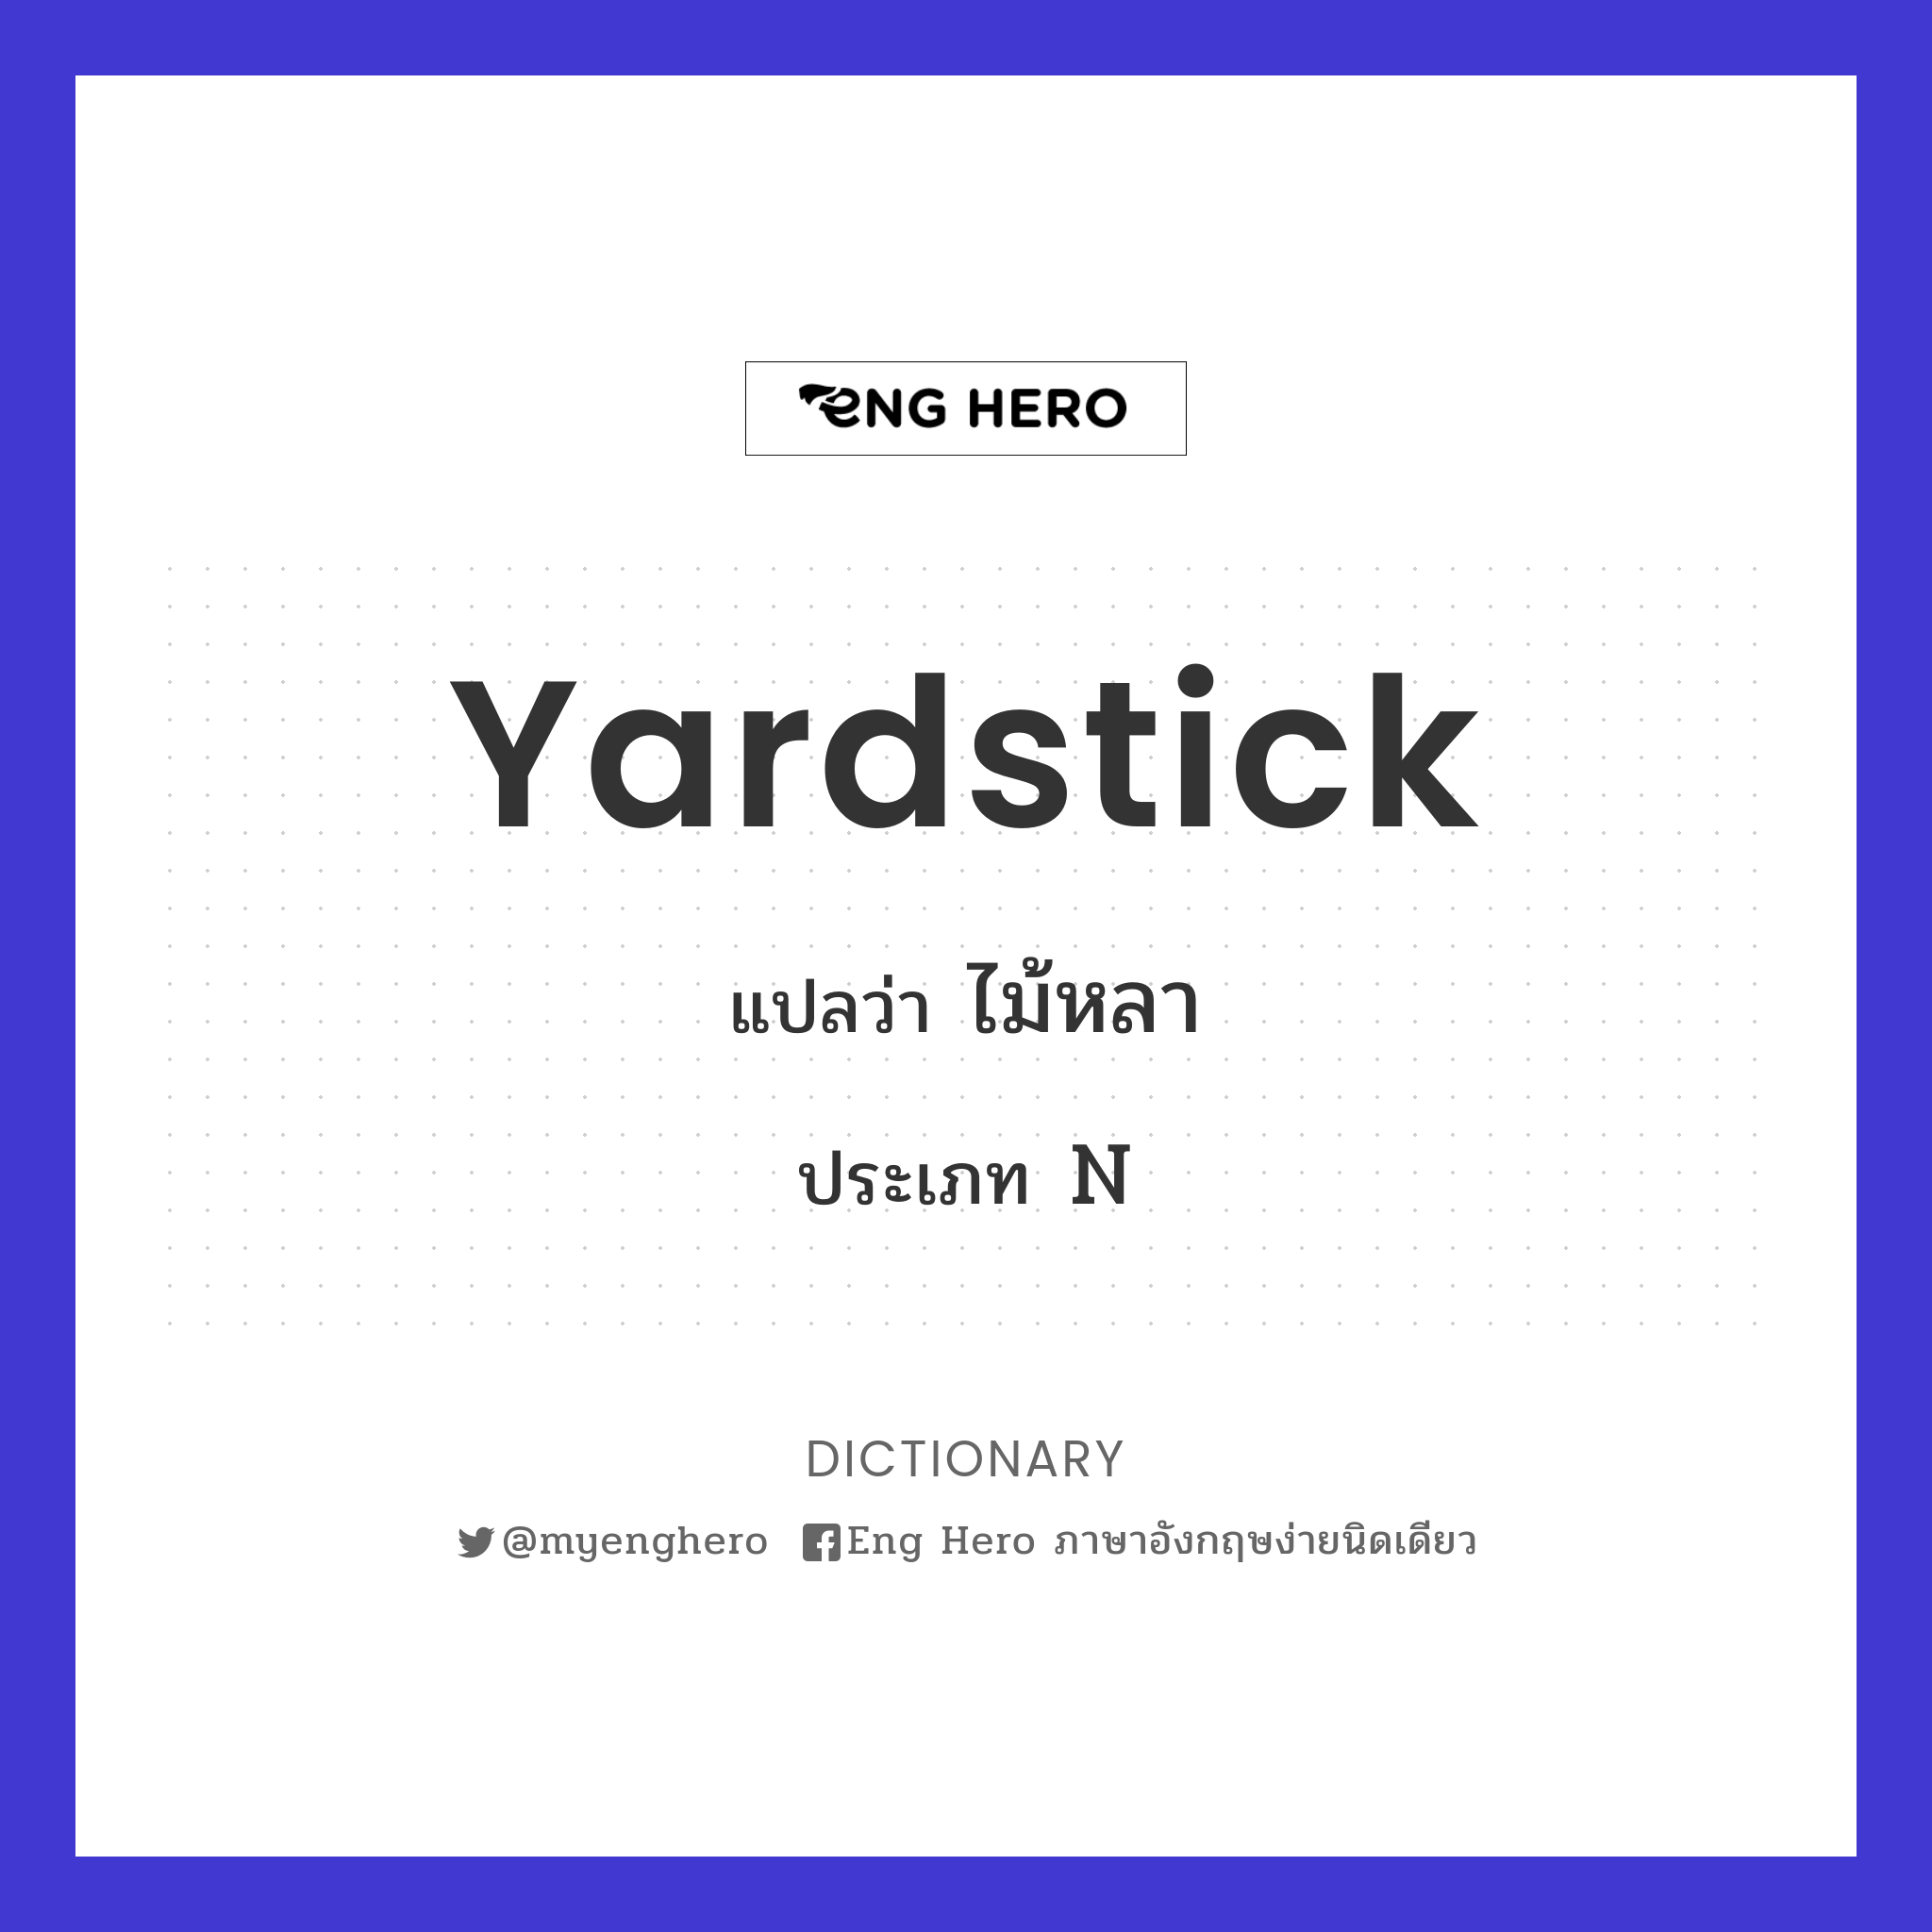 yardstick